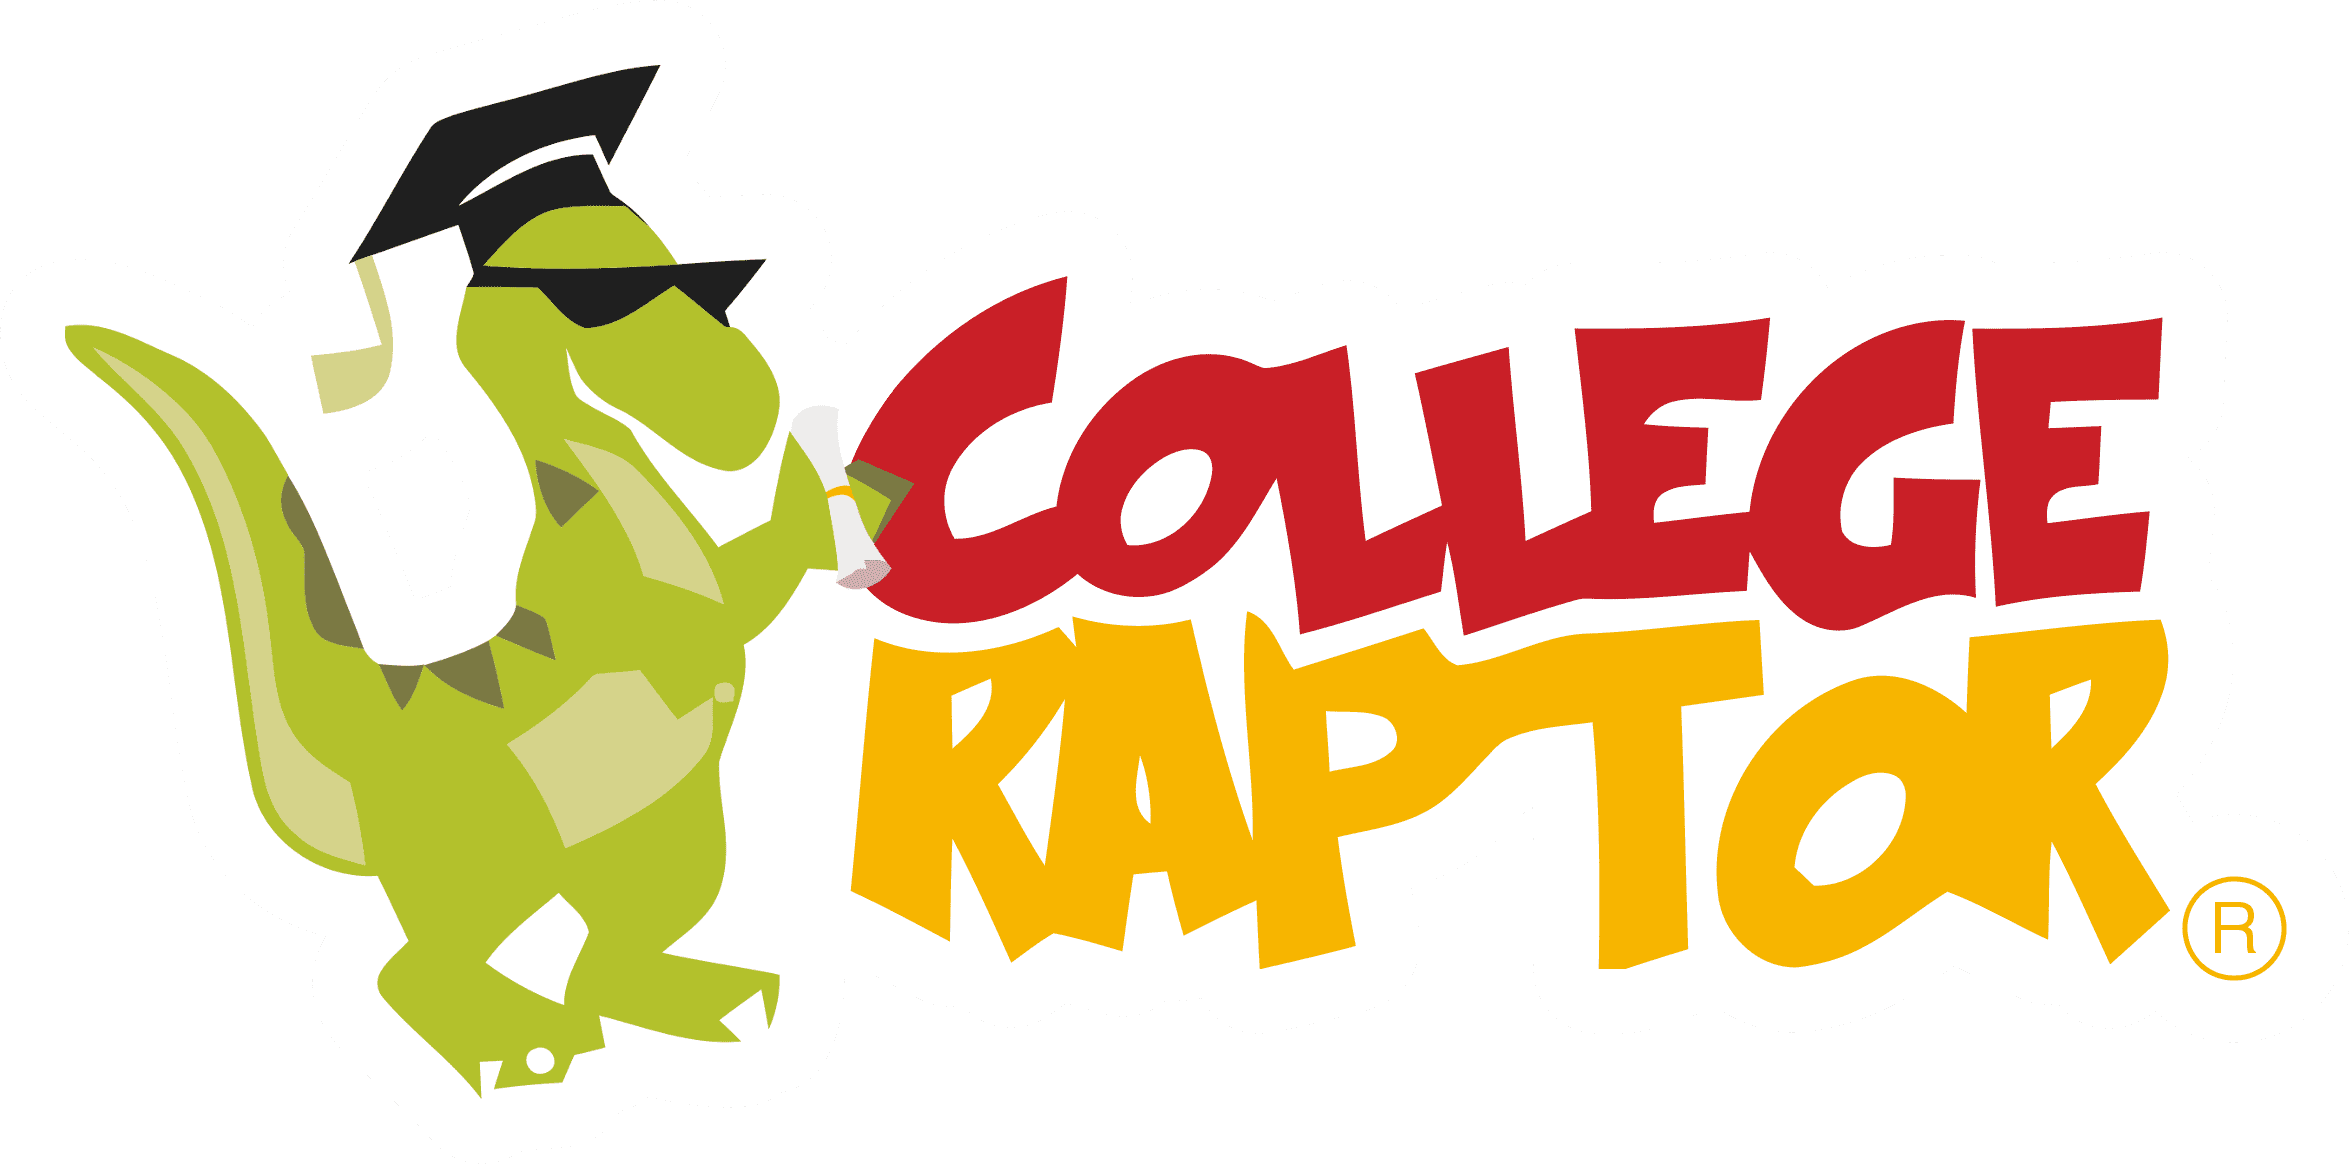 College Raptor - College Raptor (2349x1164)